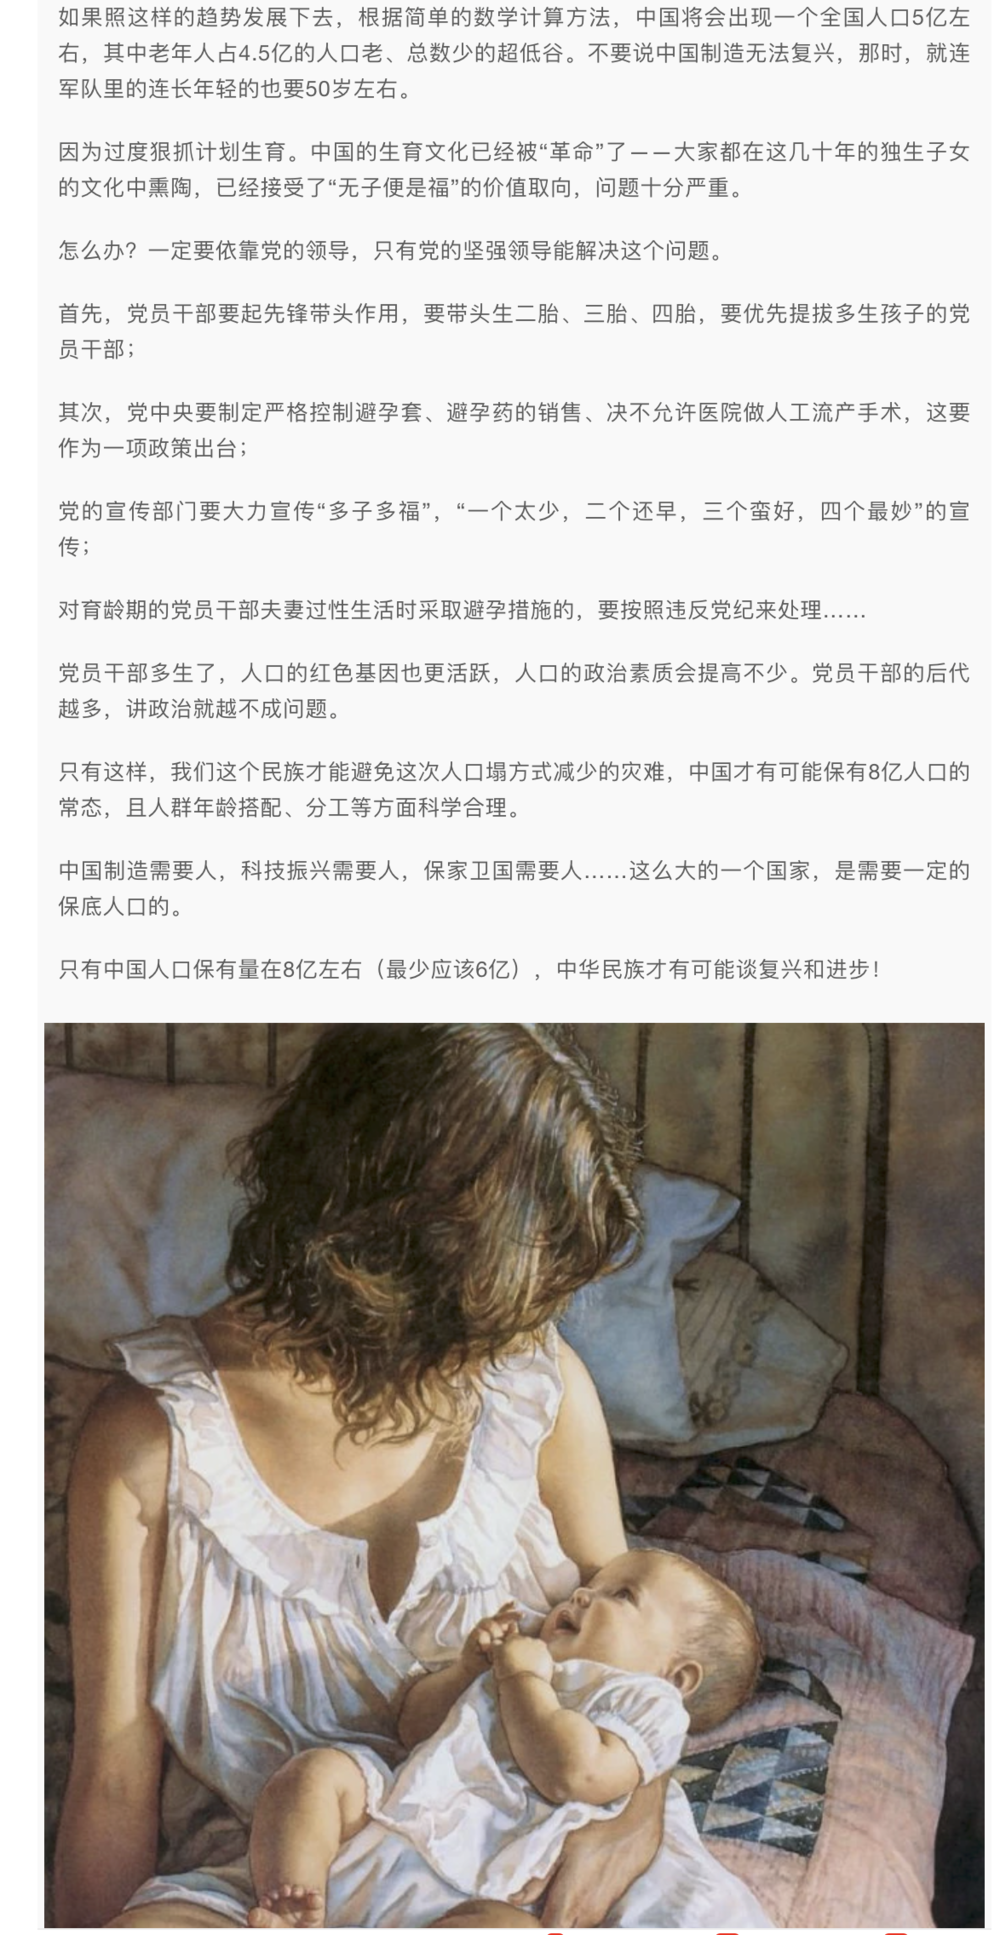 Screenshot 2 of Nie’s article. 聶聖哲文章截圖1